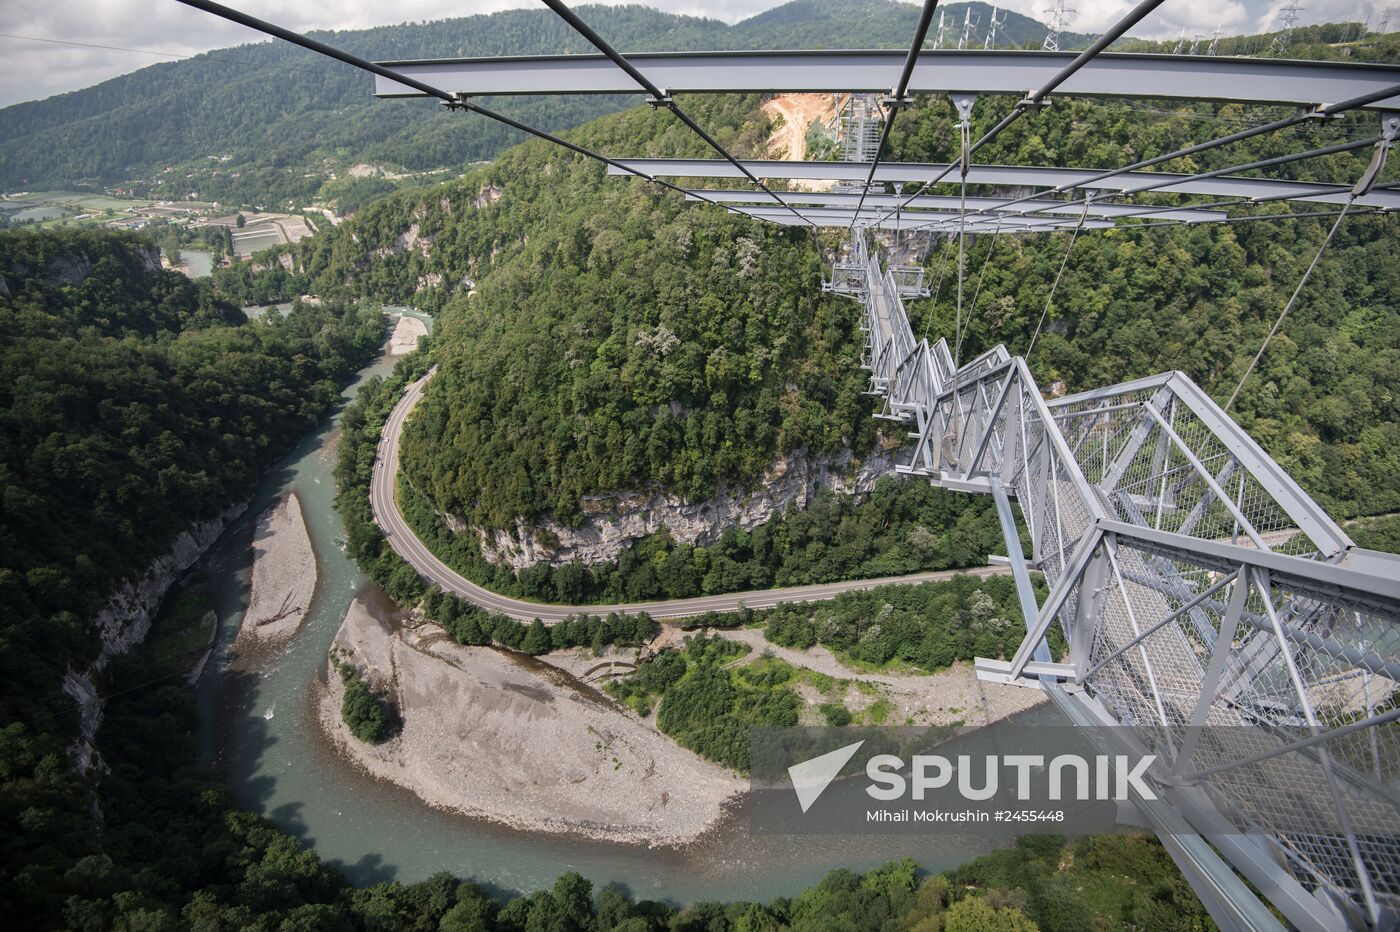 Skybridge suspension walkway in Sochi